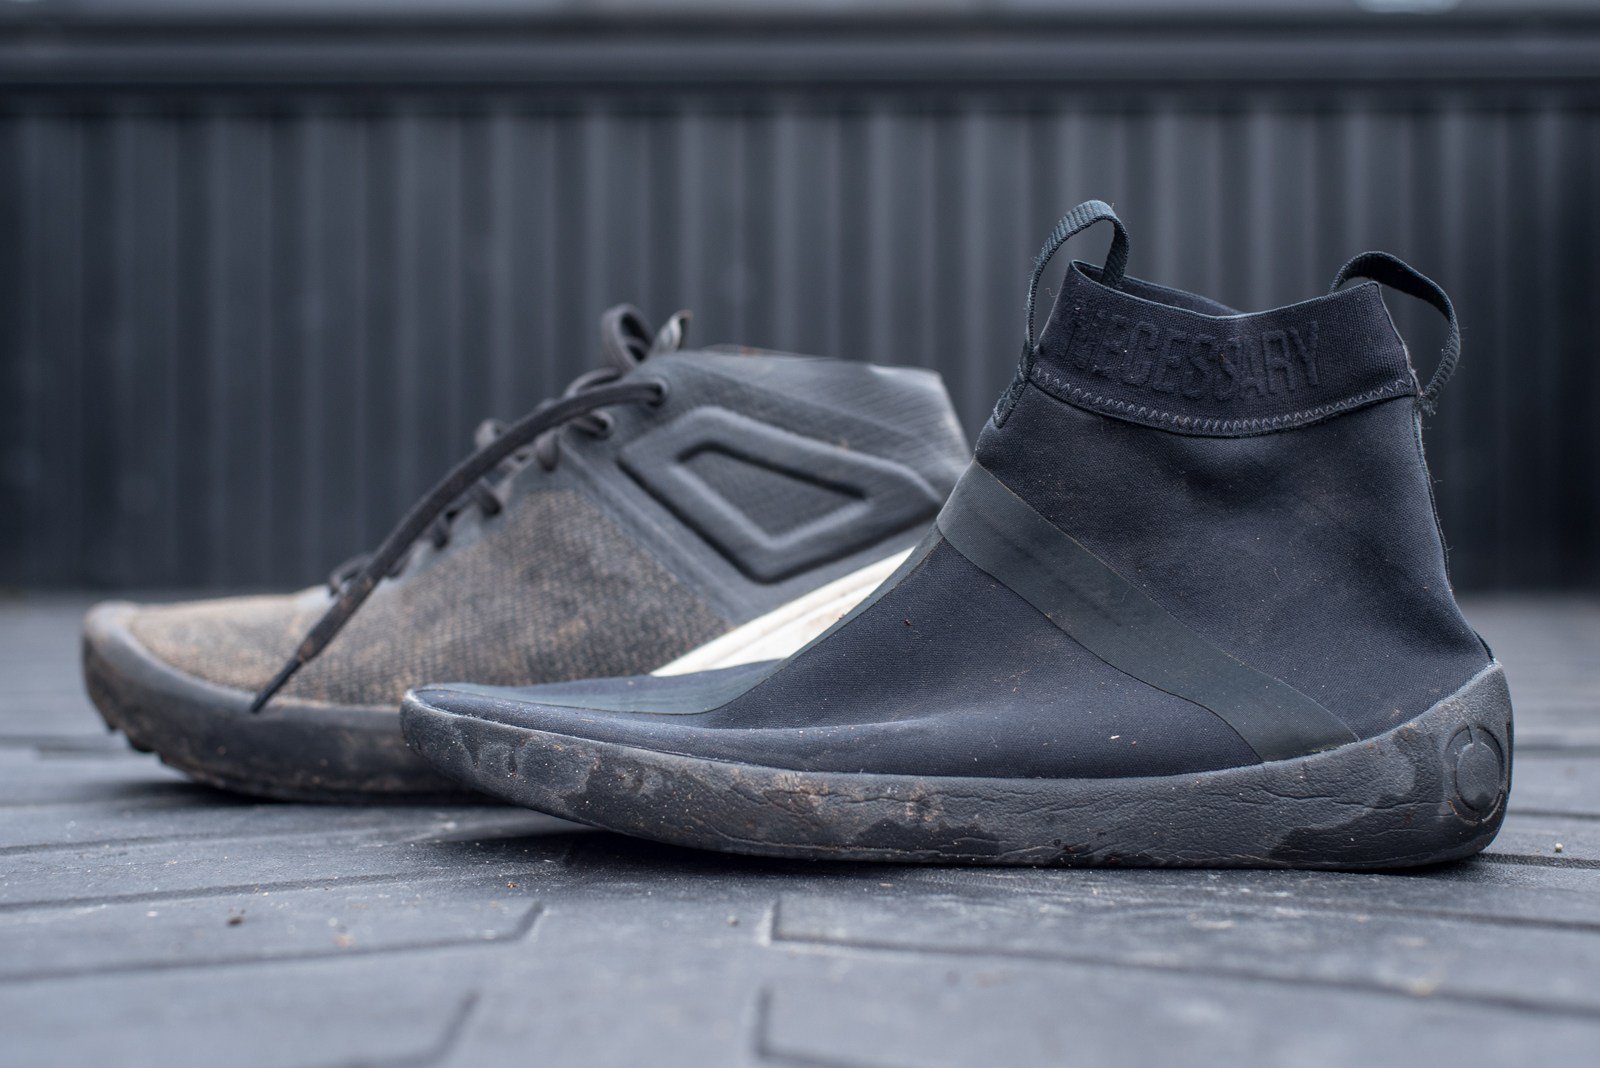 waterproof flat pedal mtb shoes